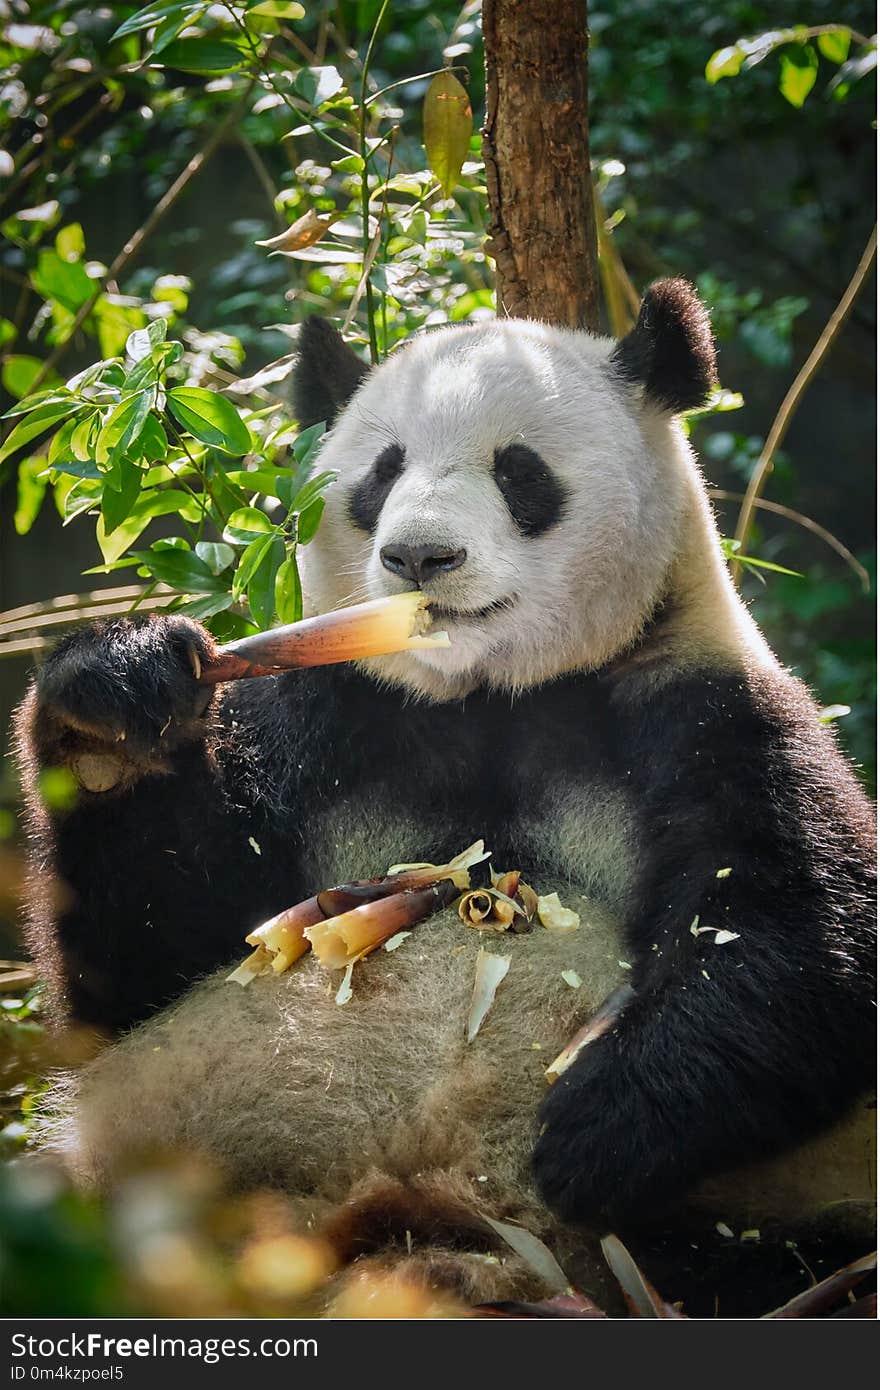 Chinese tourist symbol and attraction - giant panda bear eating bamboo. Chengdu, Sichuan, China. Chinese tourist symbol and attraction - giant panda bear eating bamboo. Chengdu, Sichuan, China